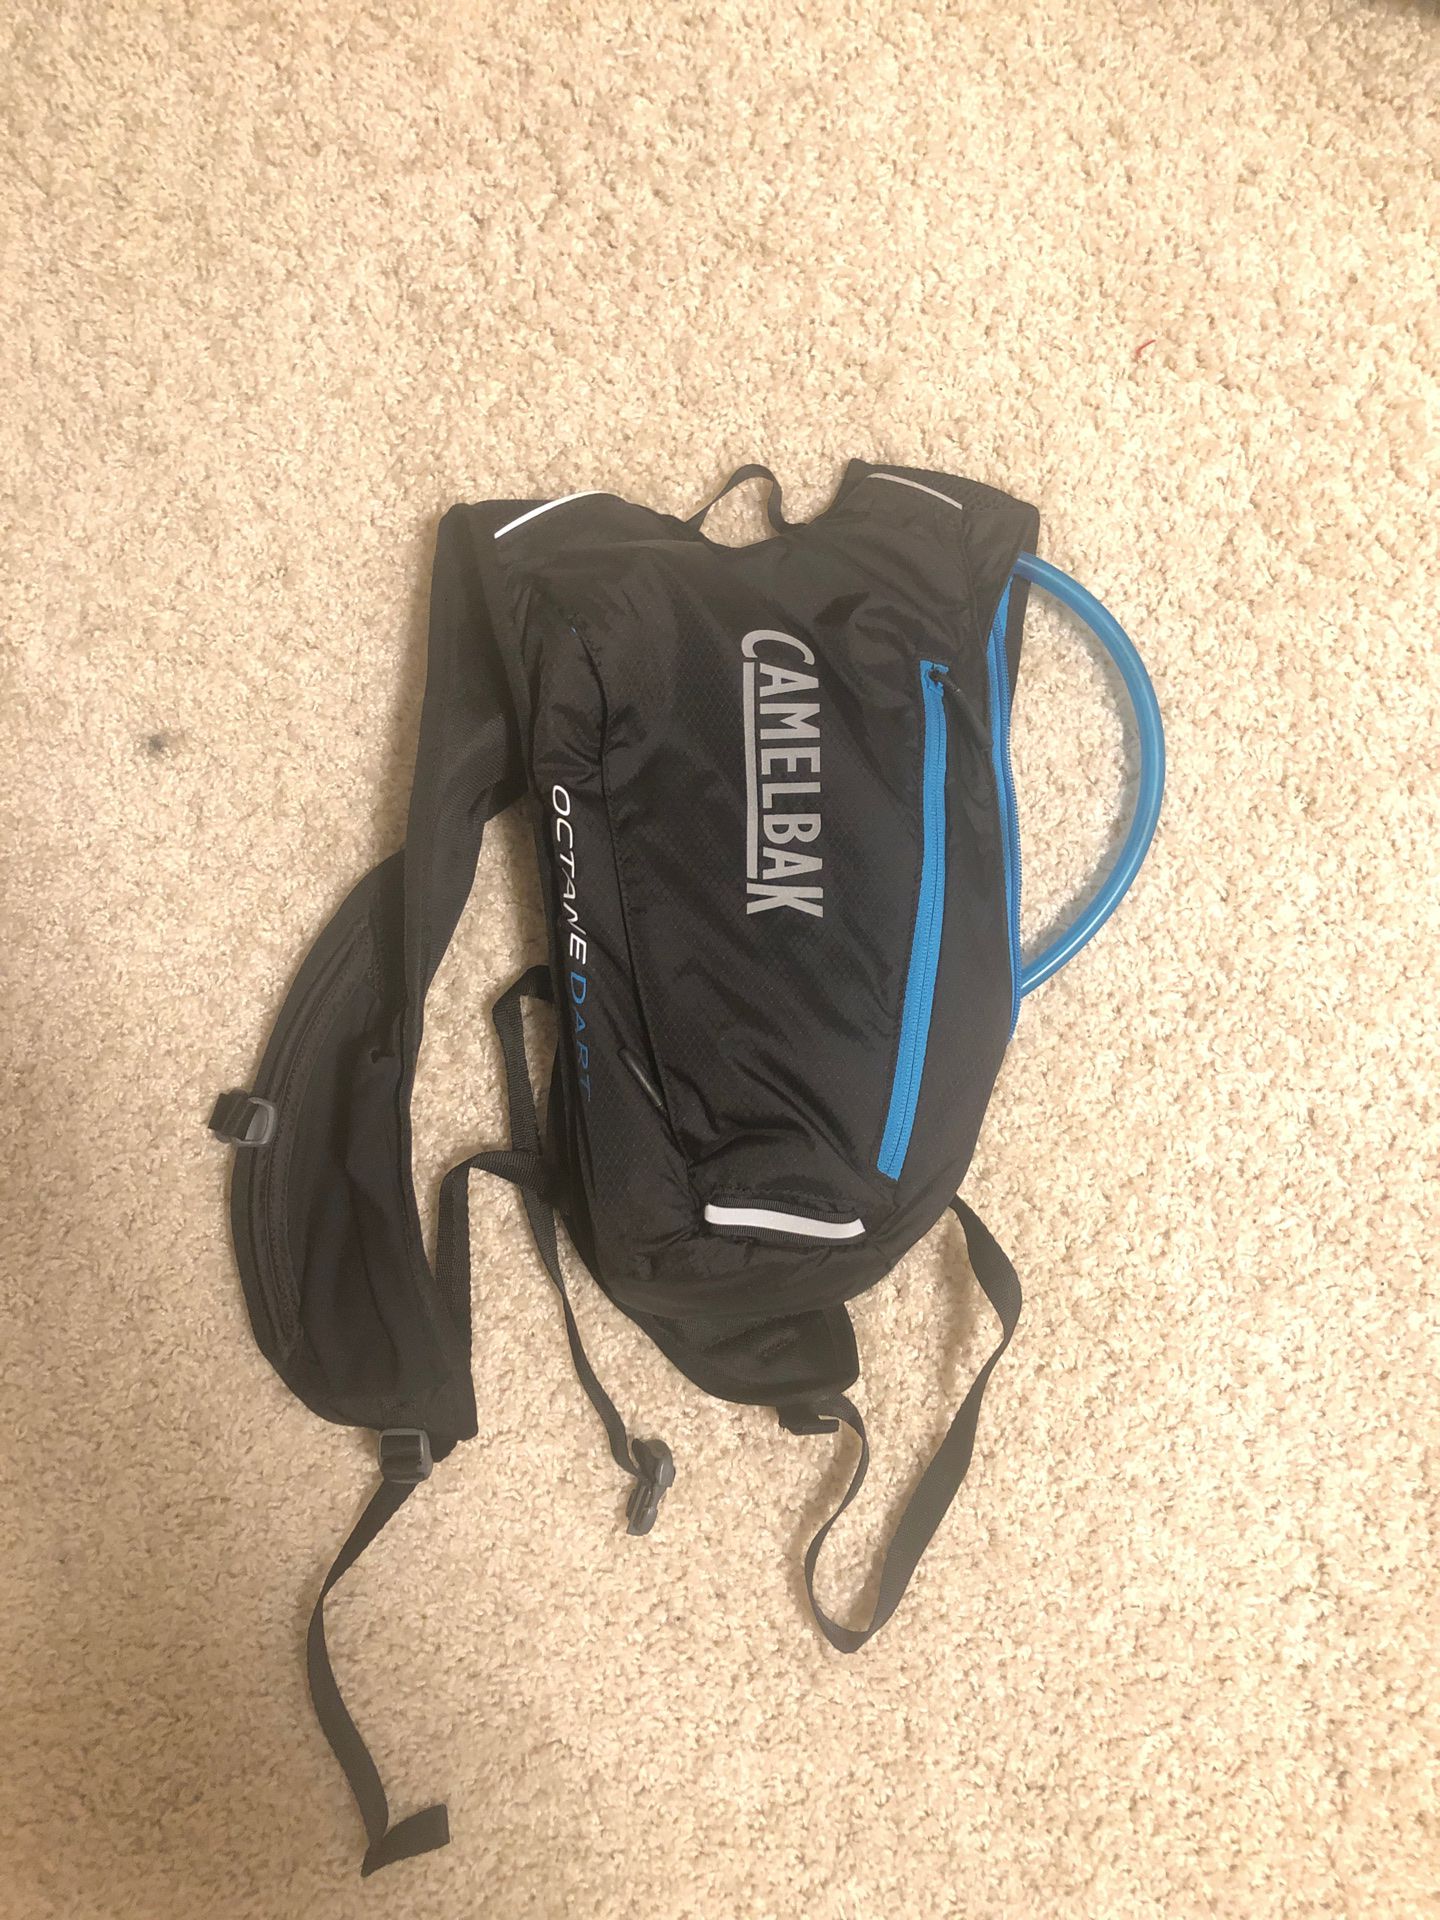 Brand new mini camelbak hydration backpack